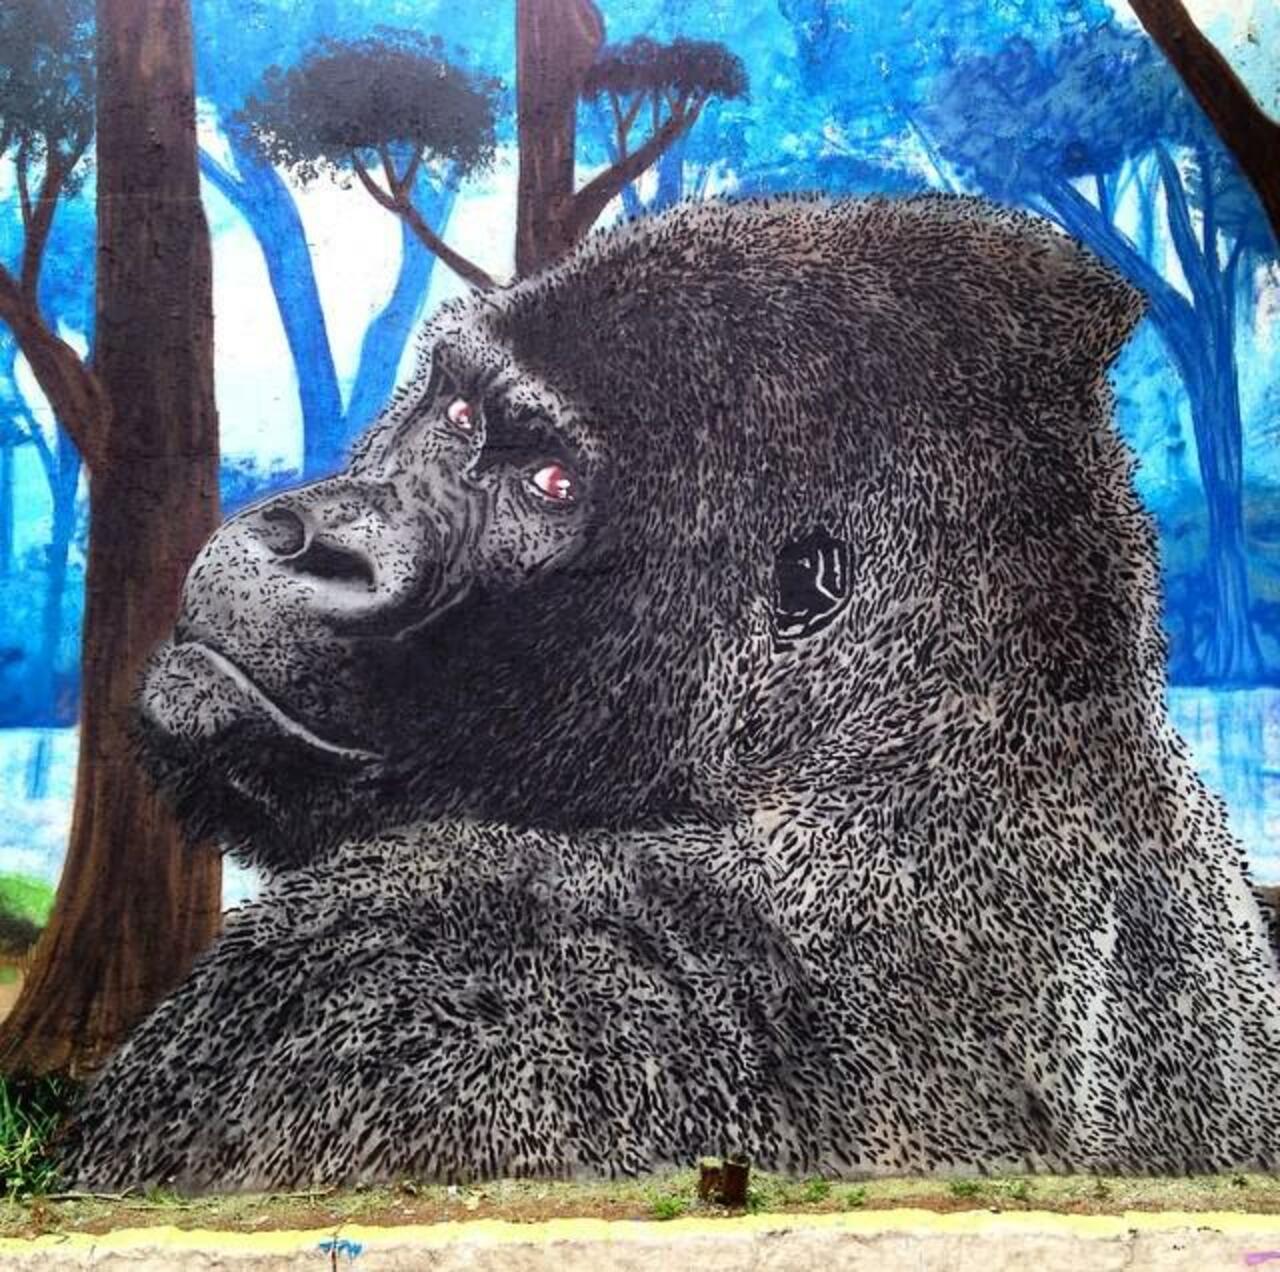 Superb Nature in Street Art piece by Thassio in São Paulo, Brazil  

#art #mural #graffiti #streetart http://t.co/il6YaHe7mM